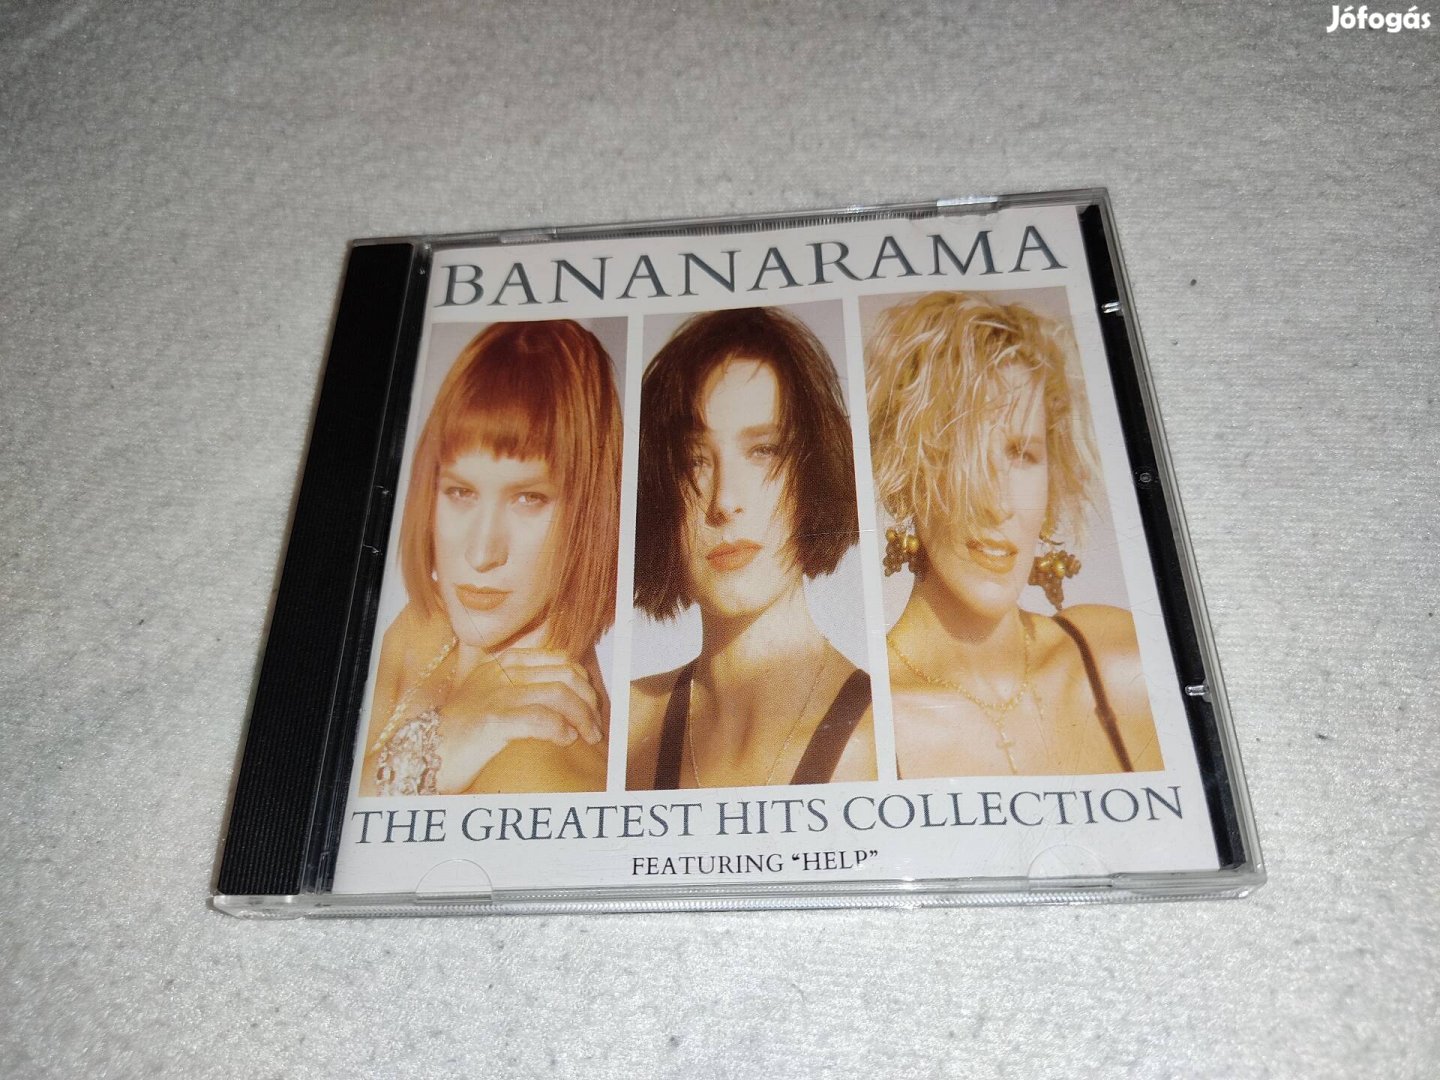 Bananarama - The Greatest Hits Collection CD (1988)